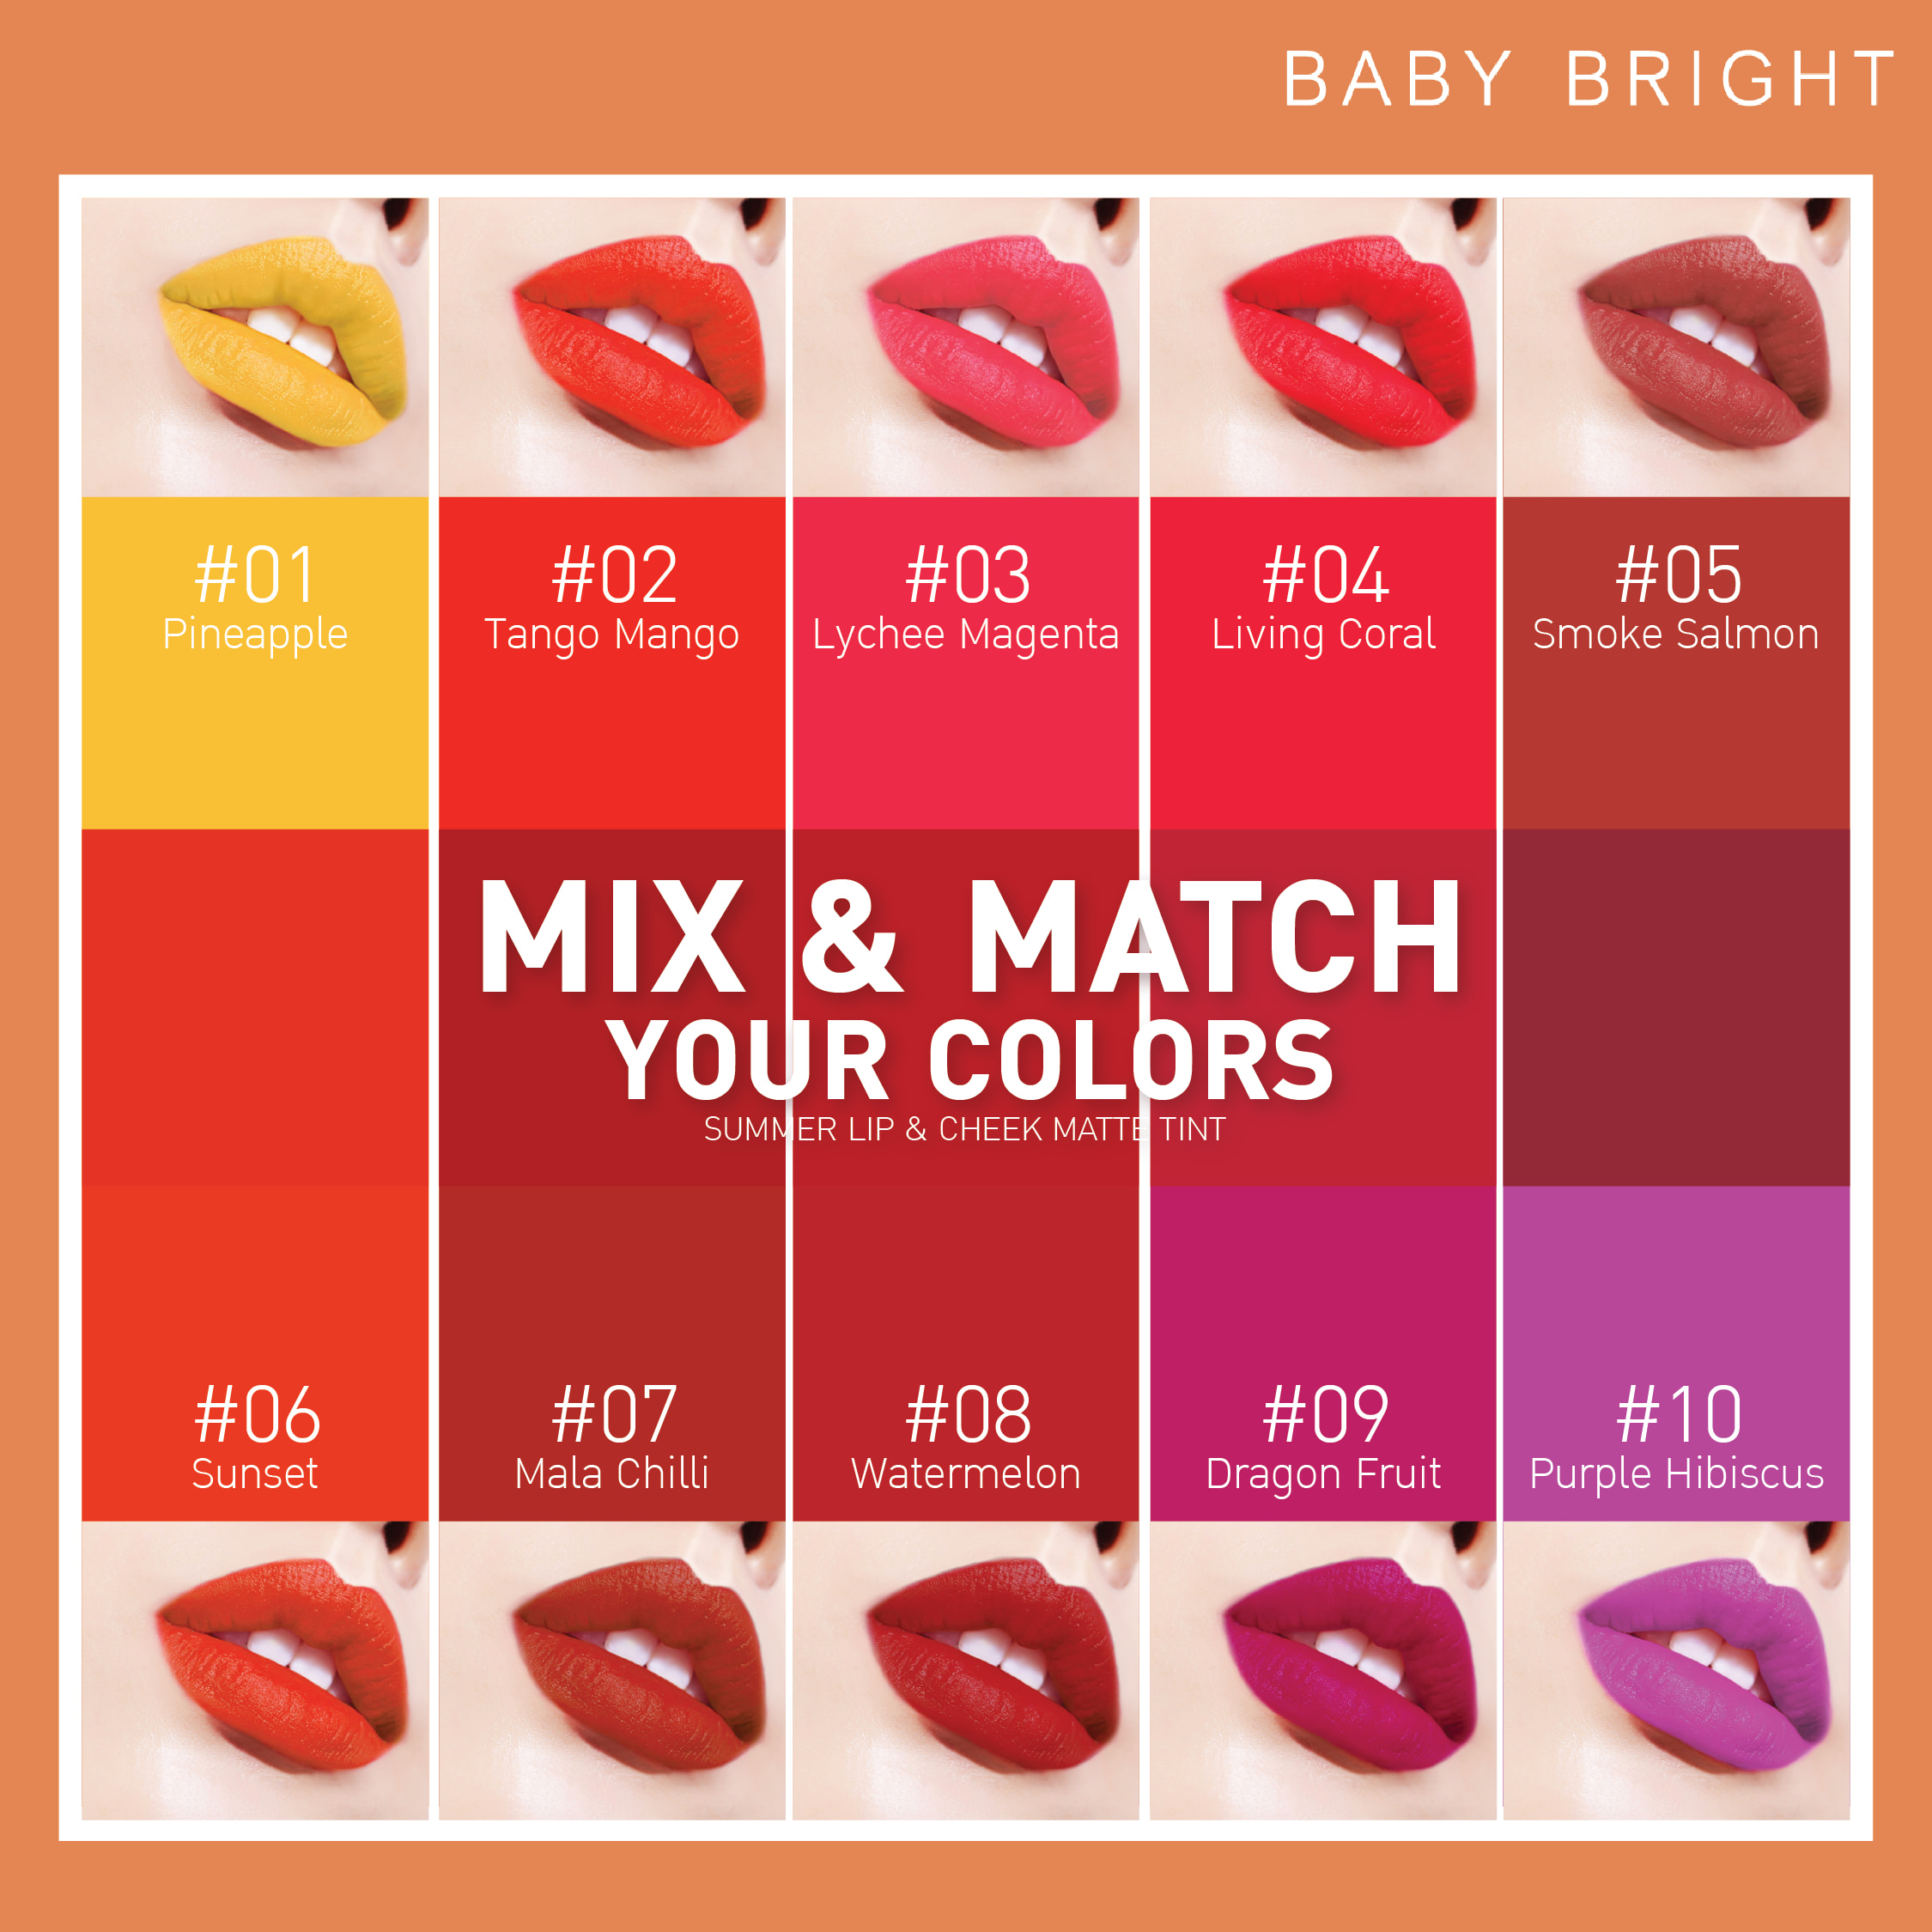 Baby Bright Summer Lip & Cheek Matte Tint Limited Edition #01 PINEAPPLE